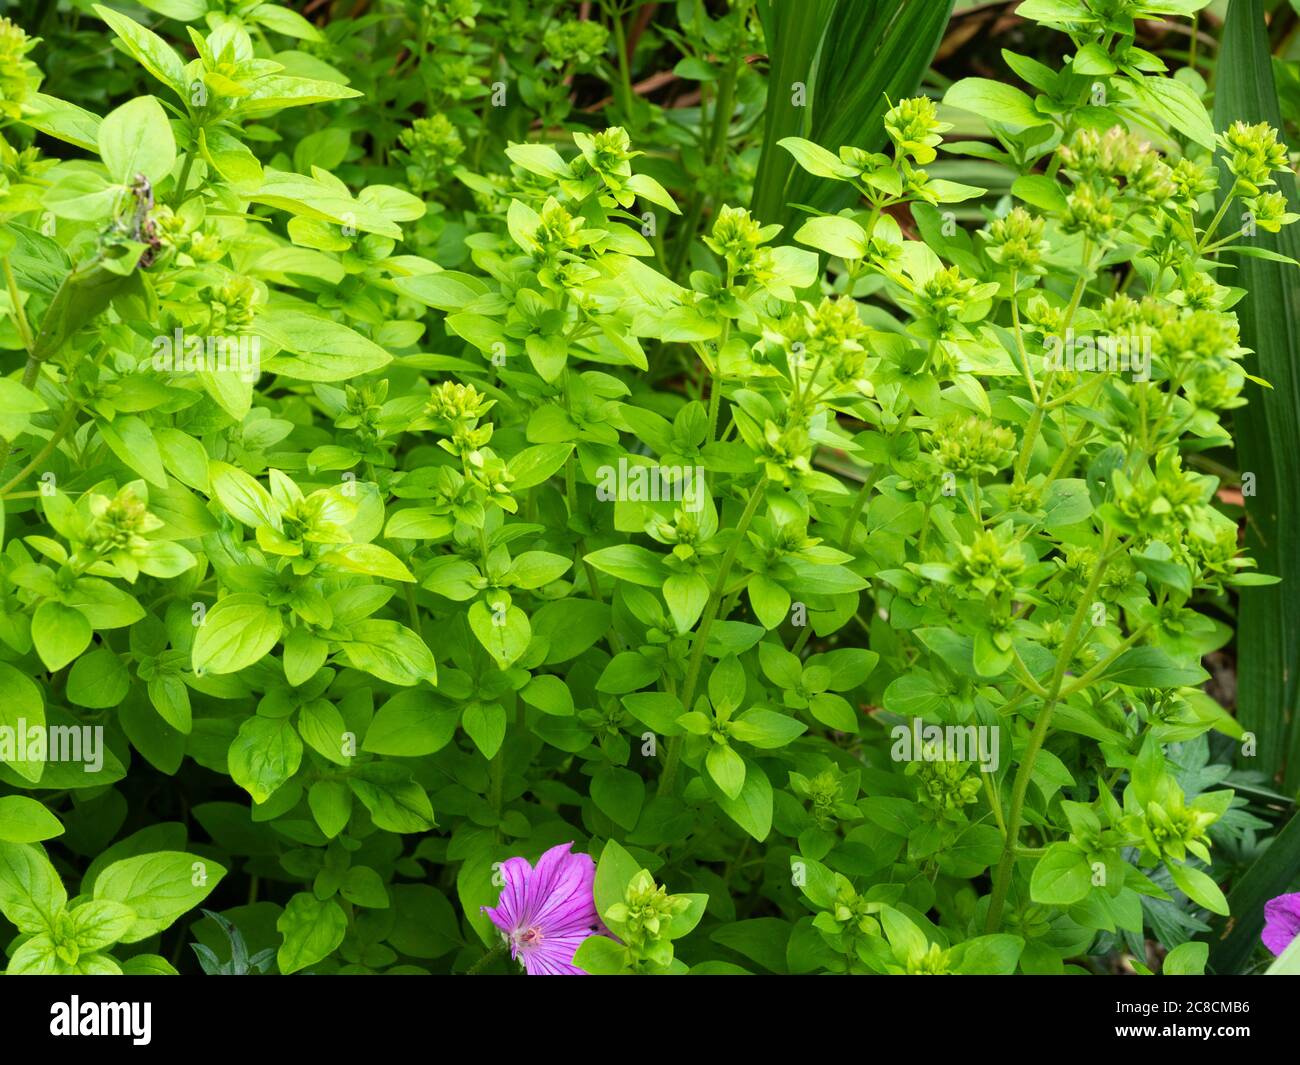 Follaje verde fresco de la hierba culinaria comestible Origanum marjorana, mejorana dulce Foto de stock